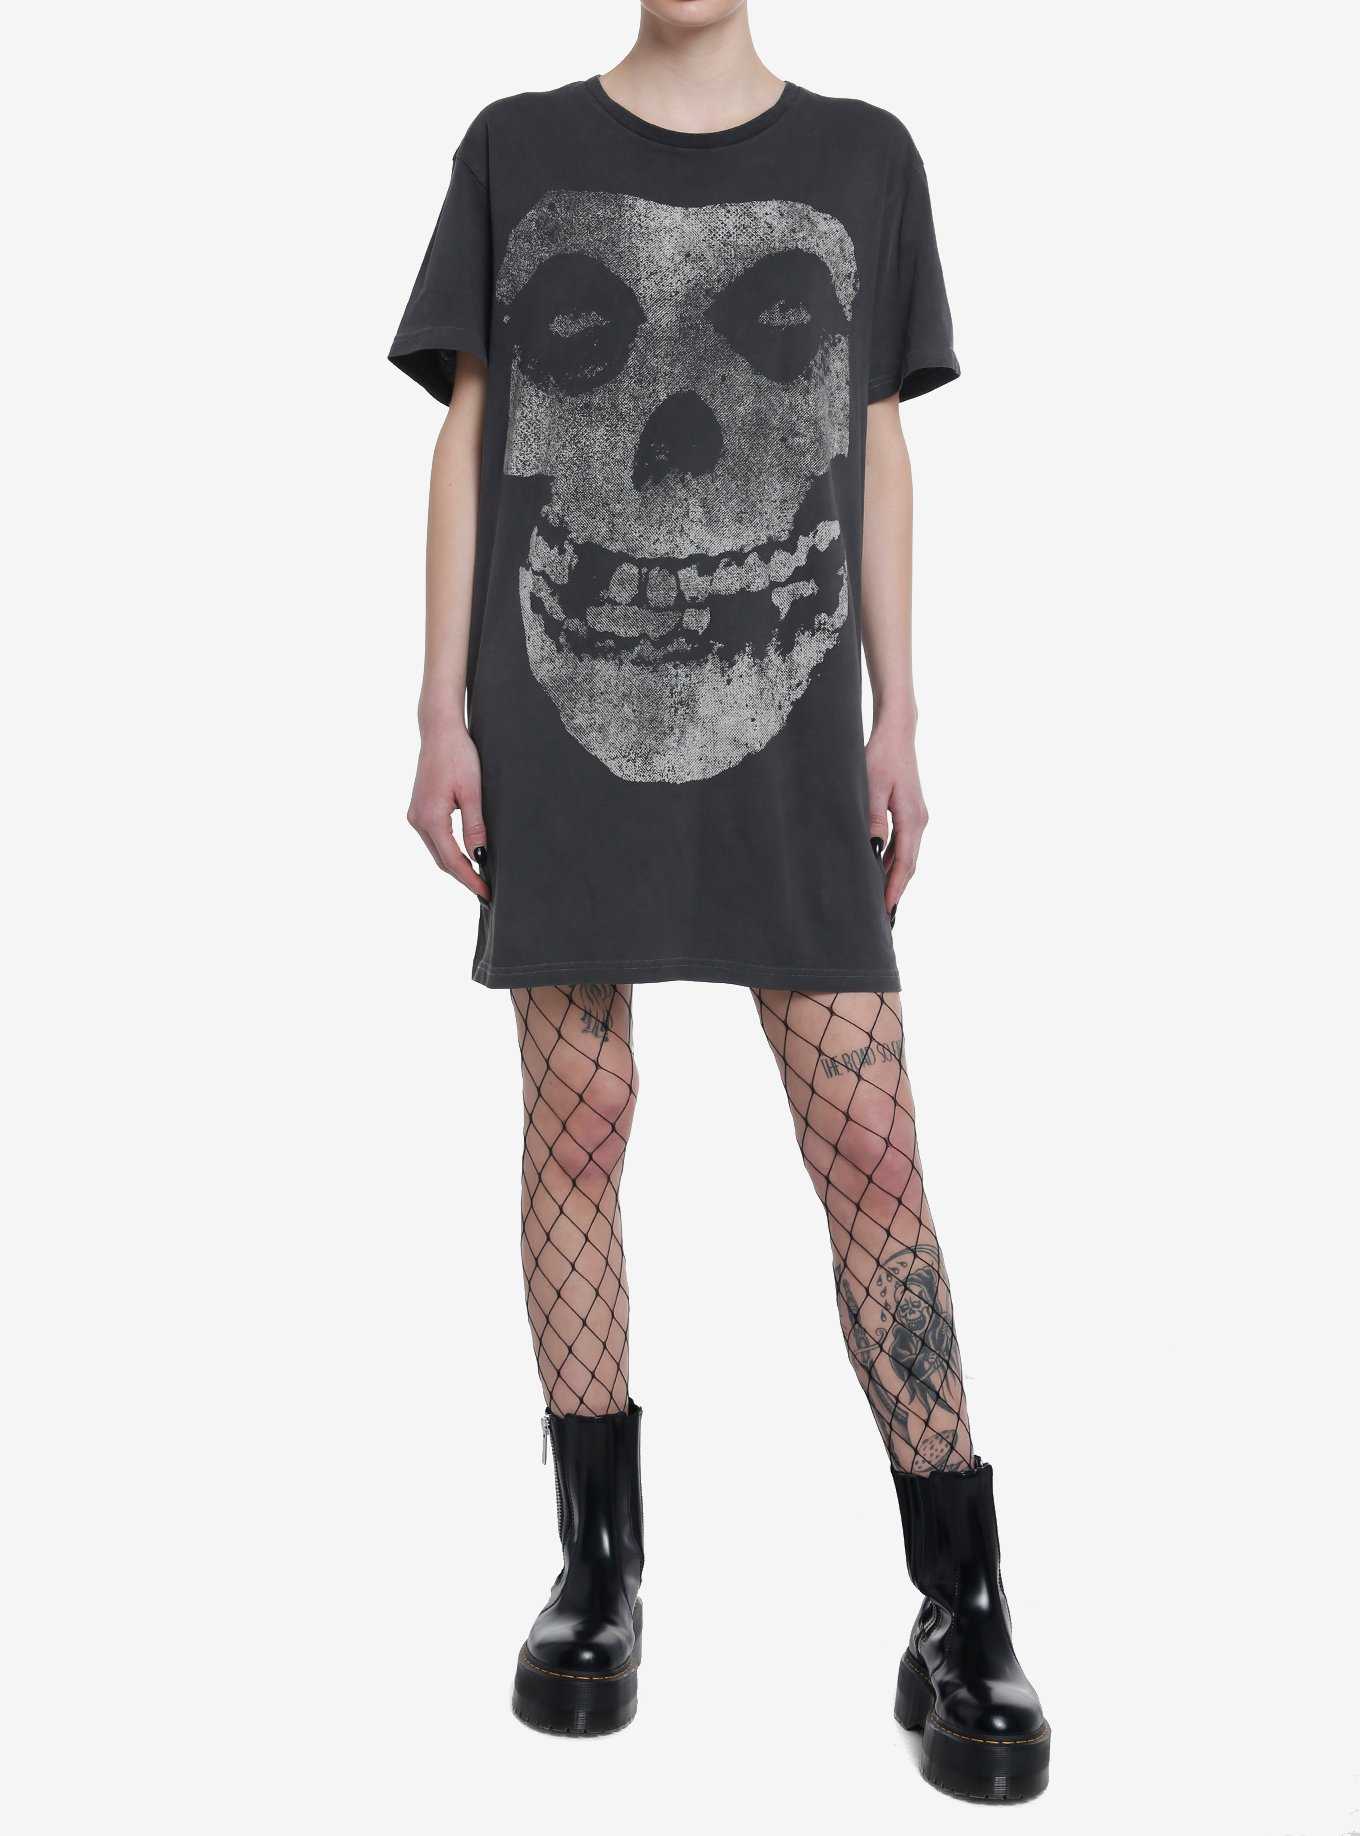 Misfits Fiend Skull T-Shirt Dress, , hi-res